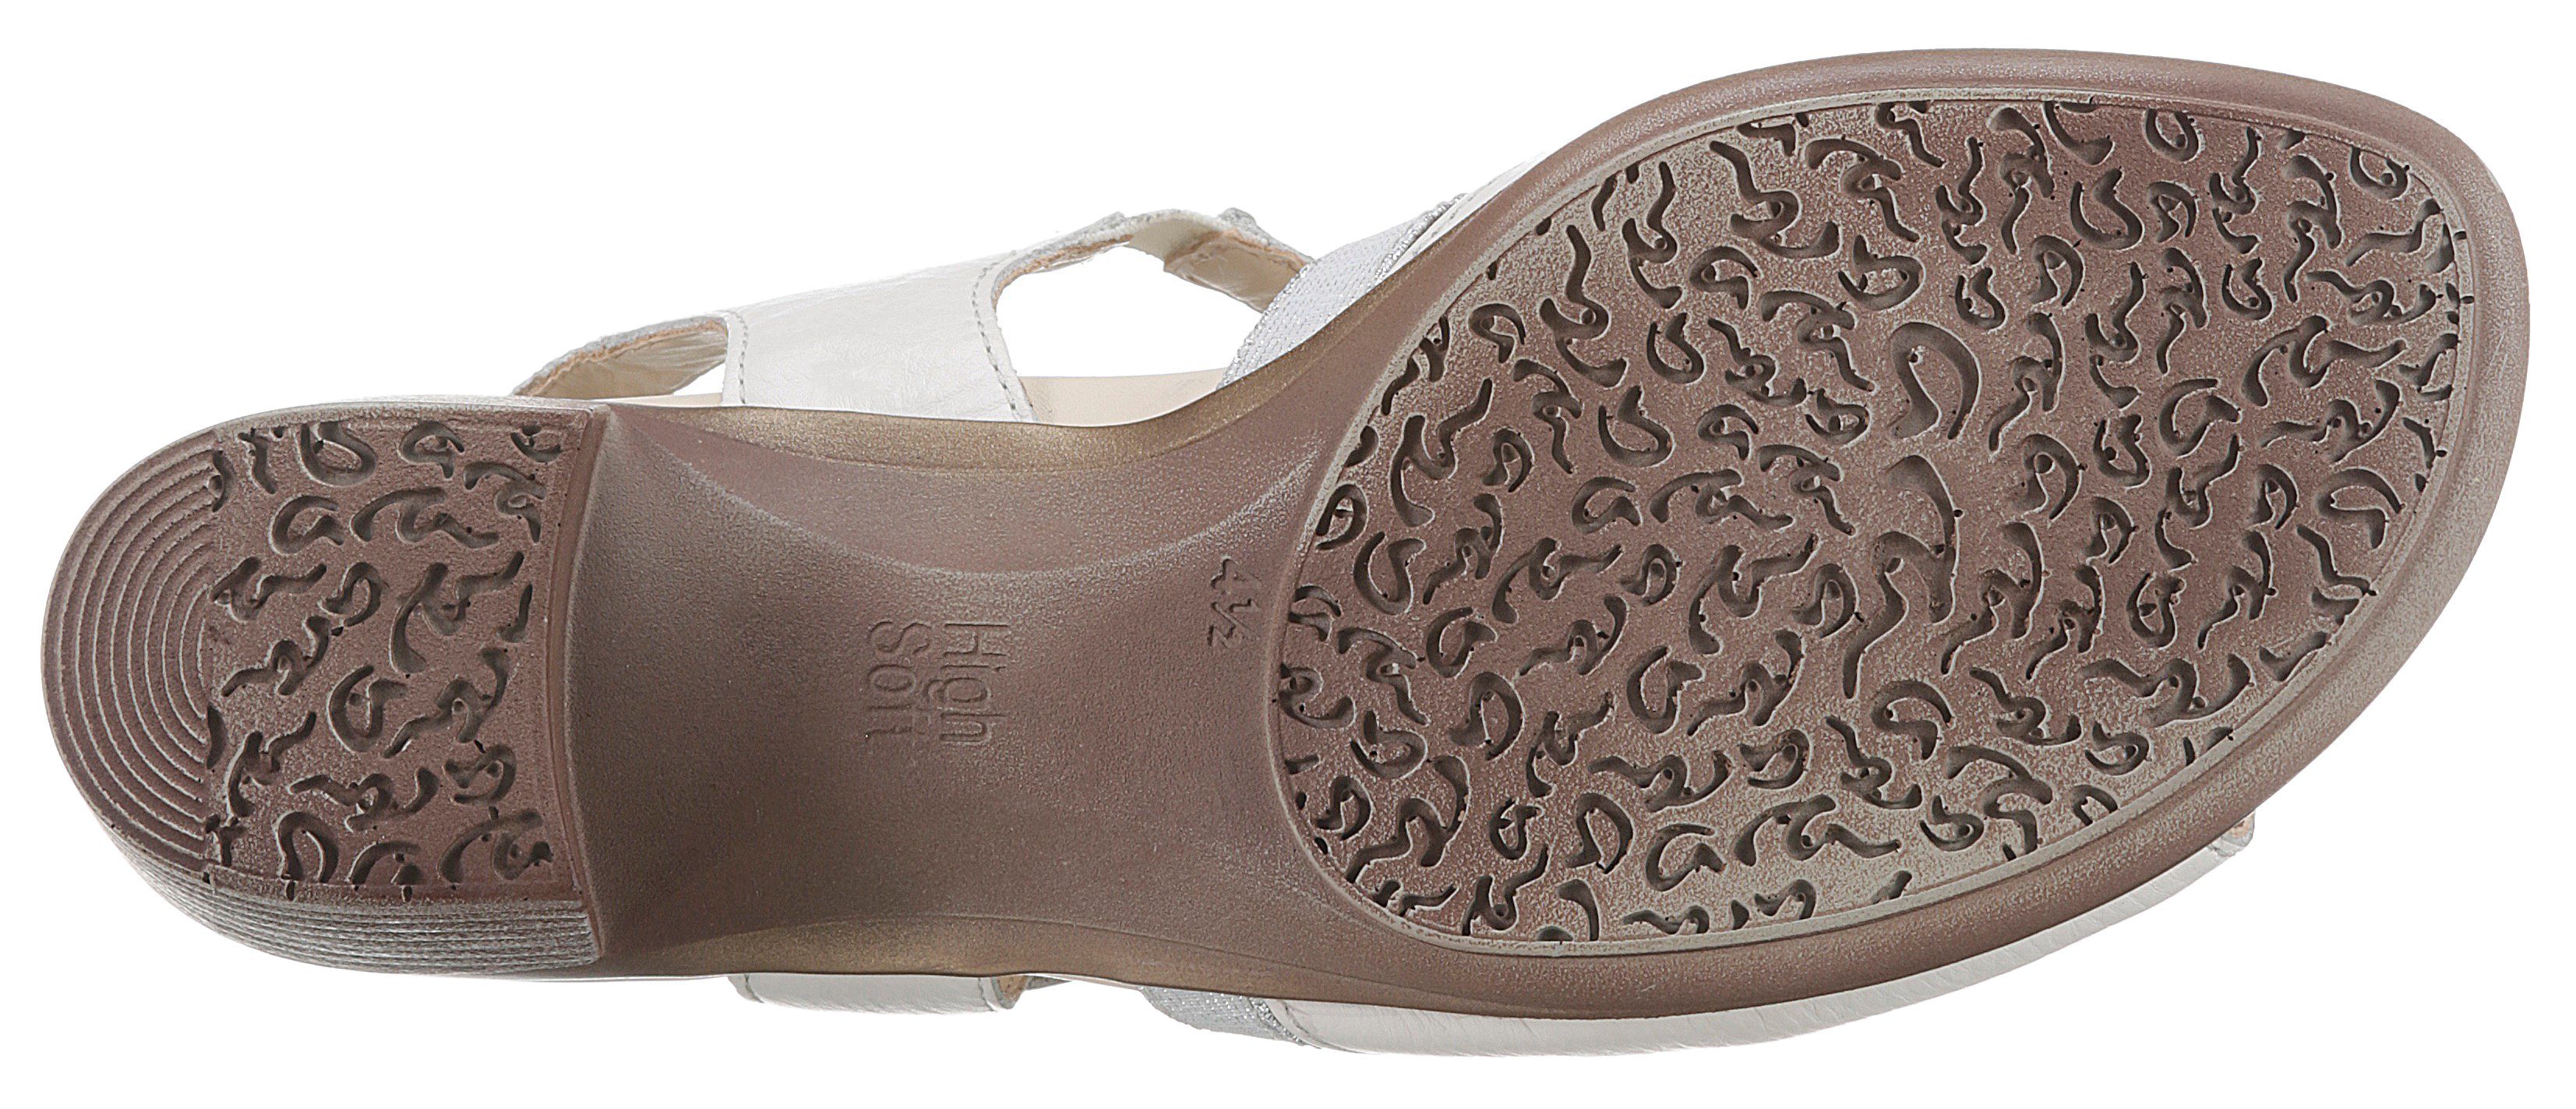 Sandalette eleganter Optik, H-Weite in 048199 Ara offwhite LUGANO